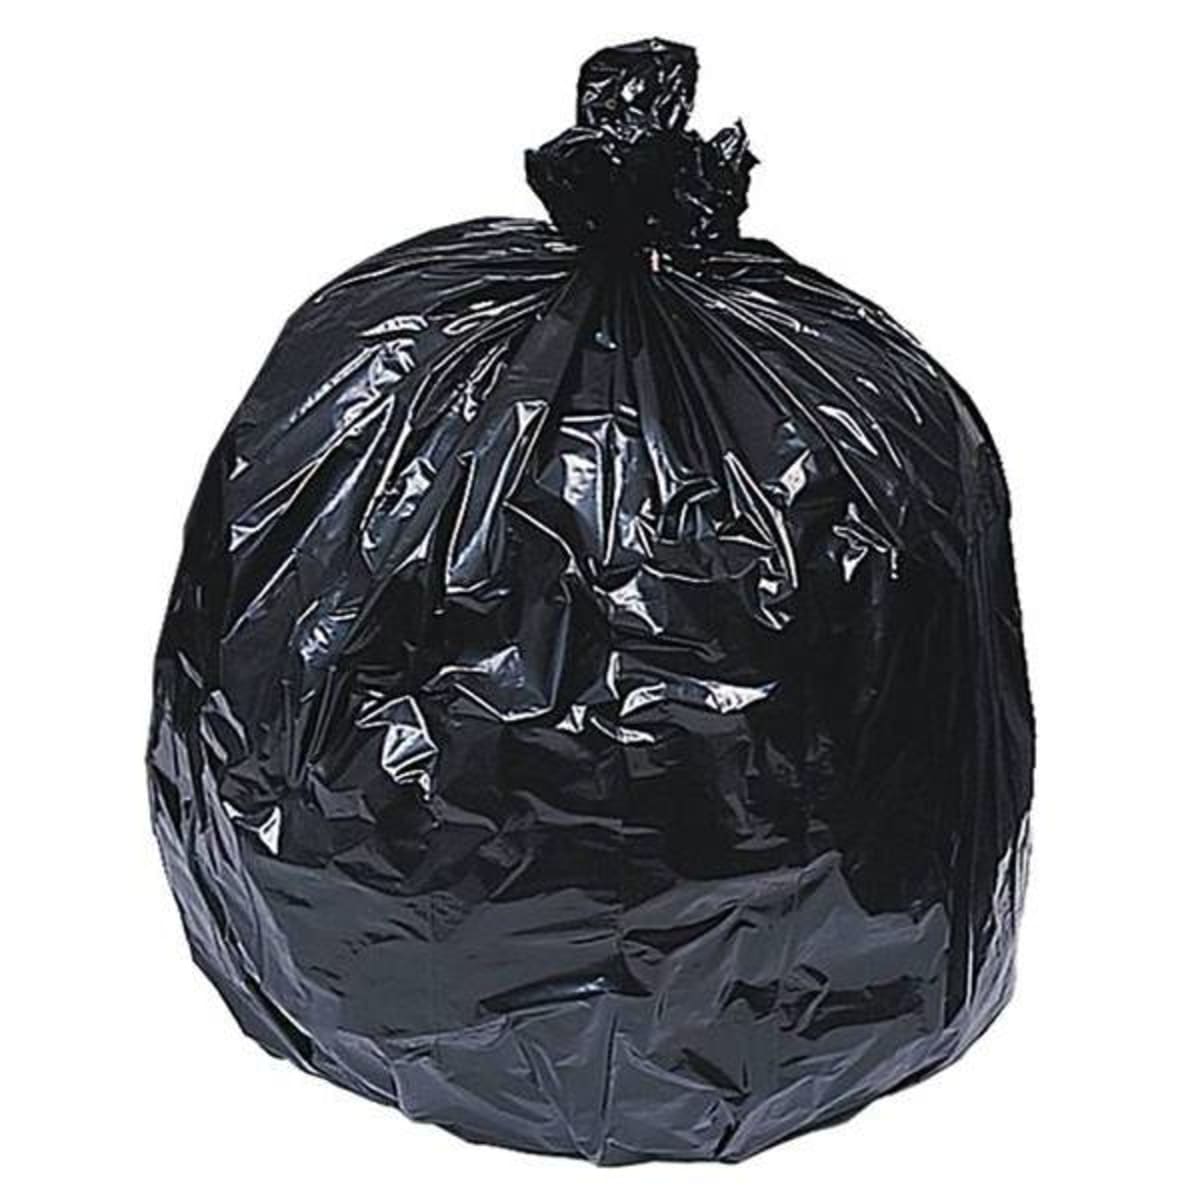 Earthsense Recycled Star Bottom Trash Bags, 55-60 gal, Black, 100